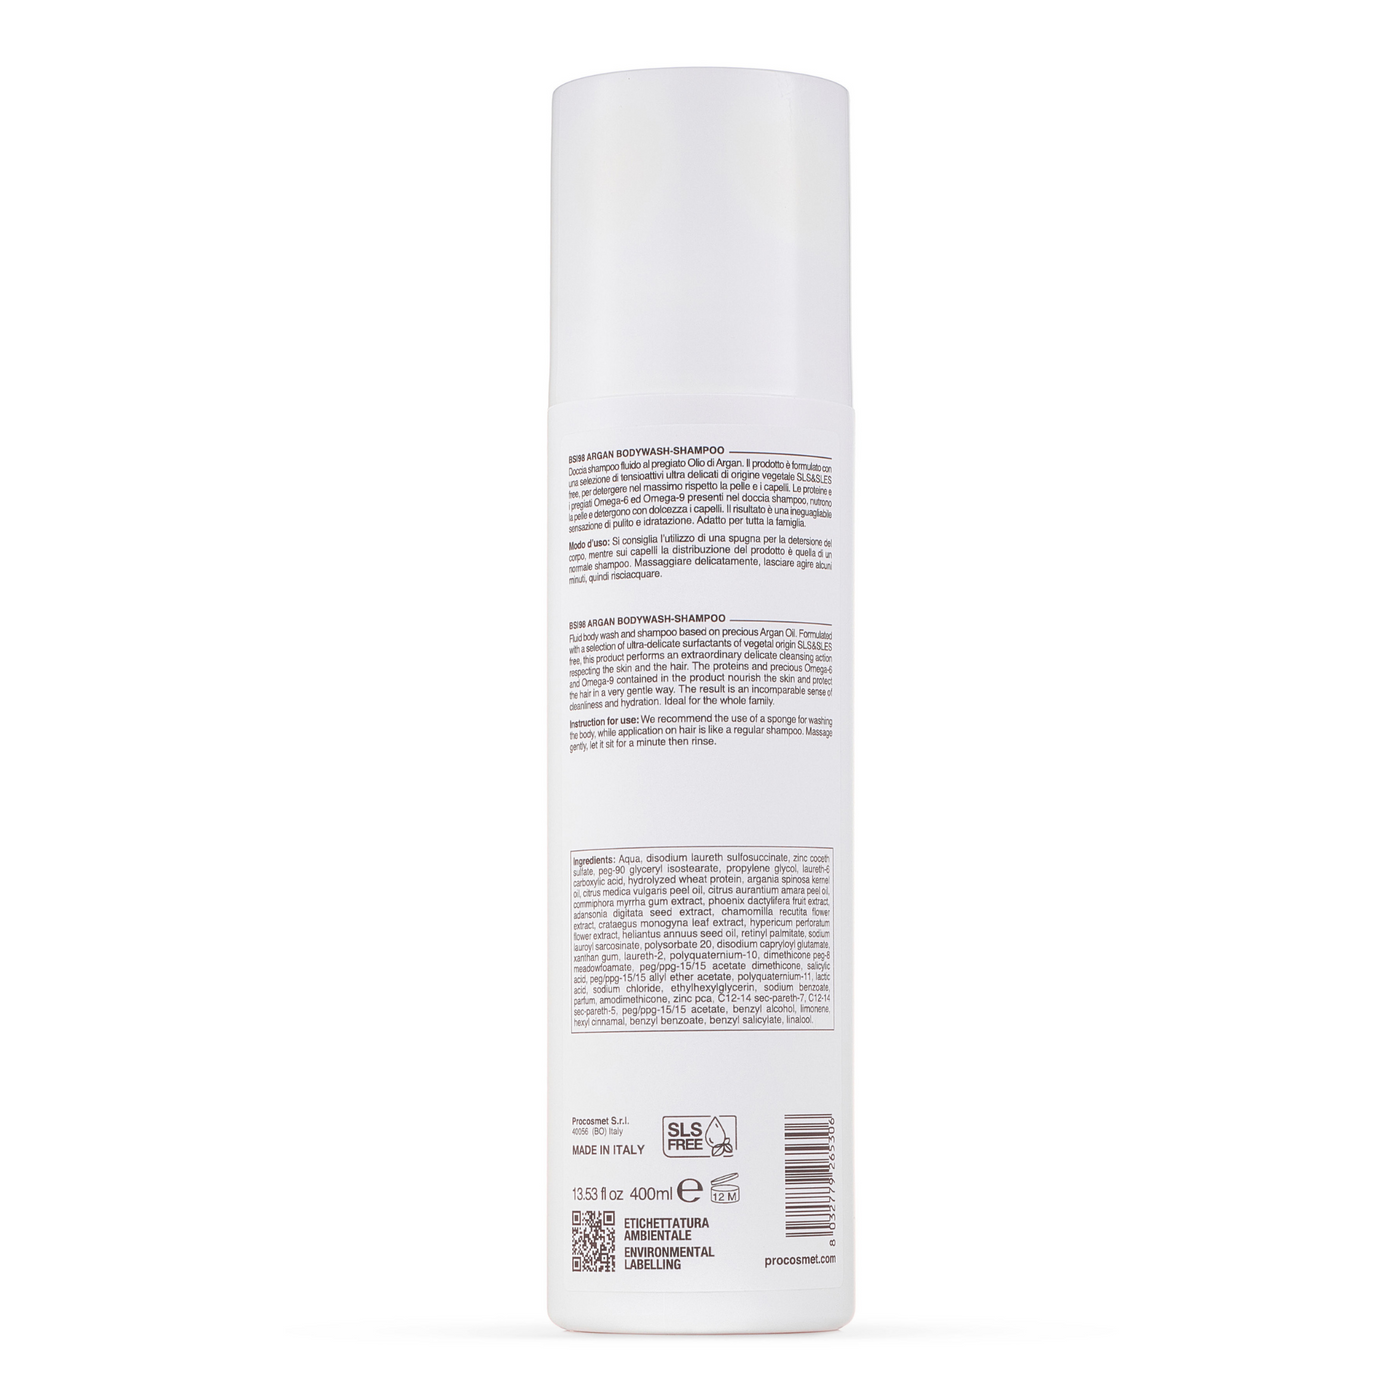 NAPURA BS98 (13.53 fl oz) 2-in-1 Argan Oil Moisturizing Shower Gel and Shampoo